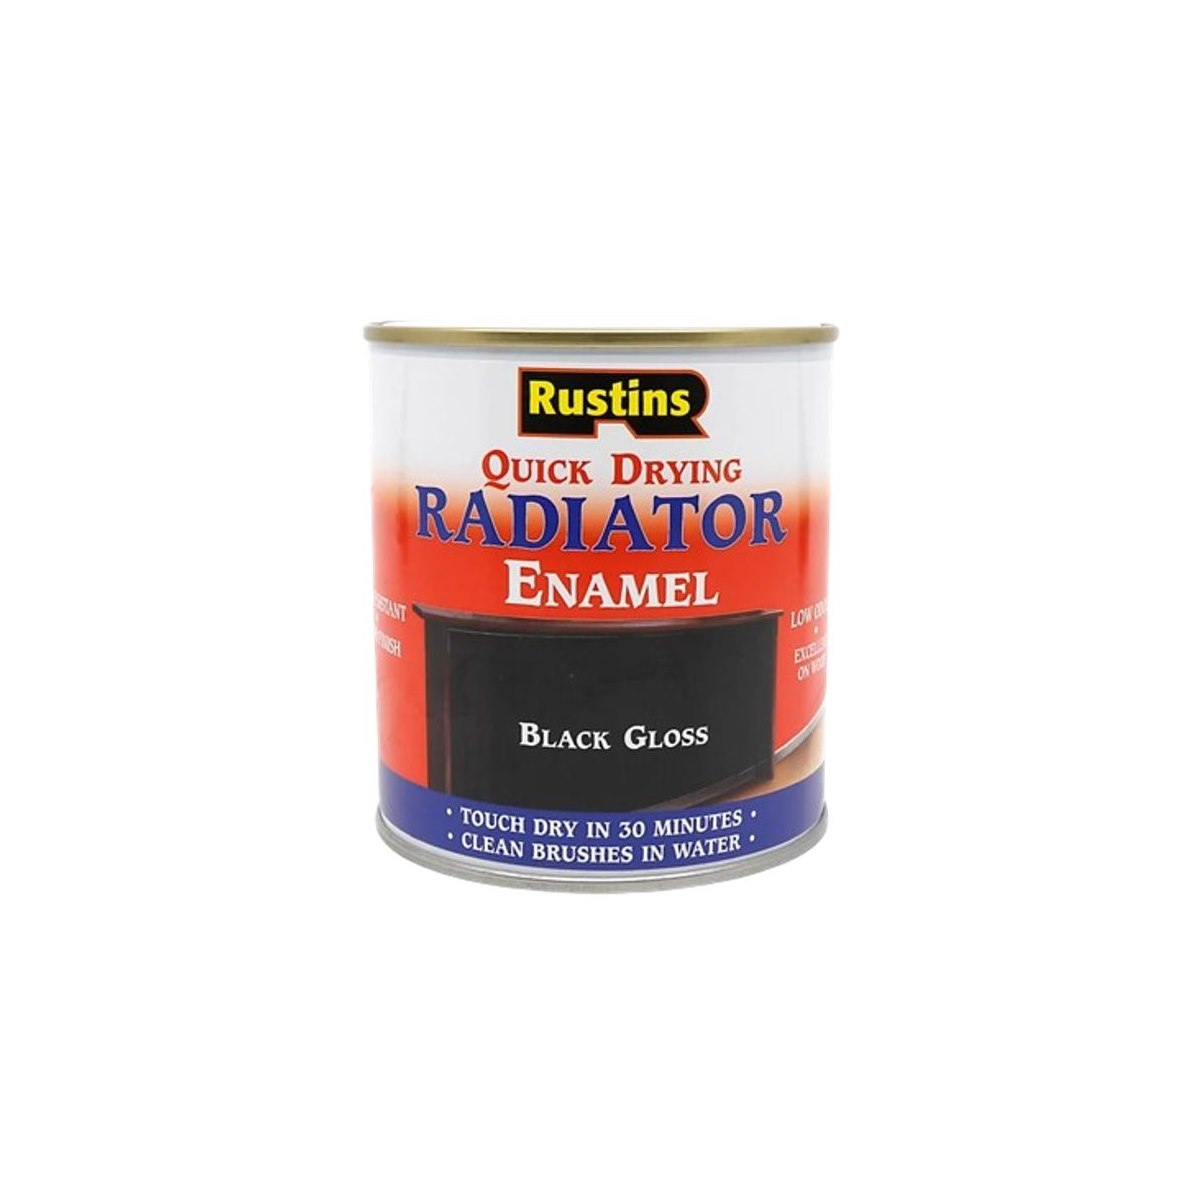 Rustins Quick Drying Radiator Enamel Black Gloss 500ml